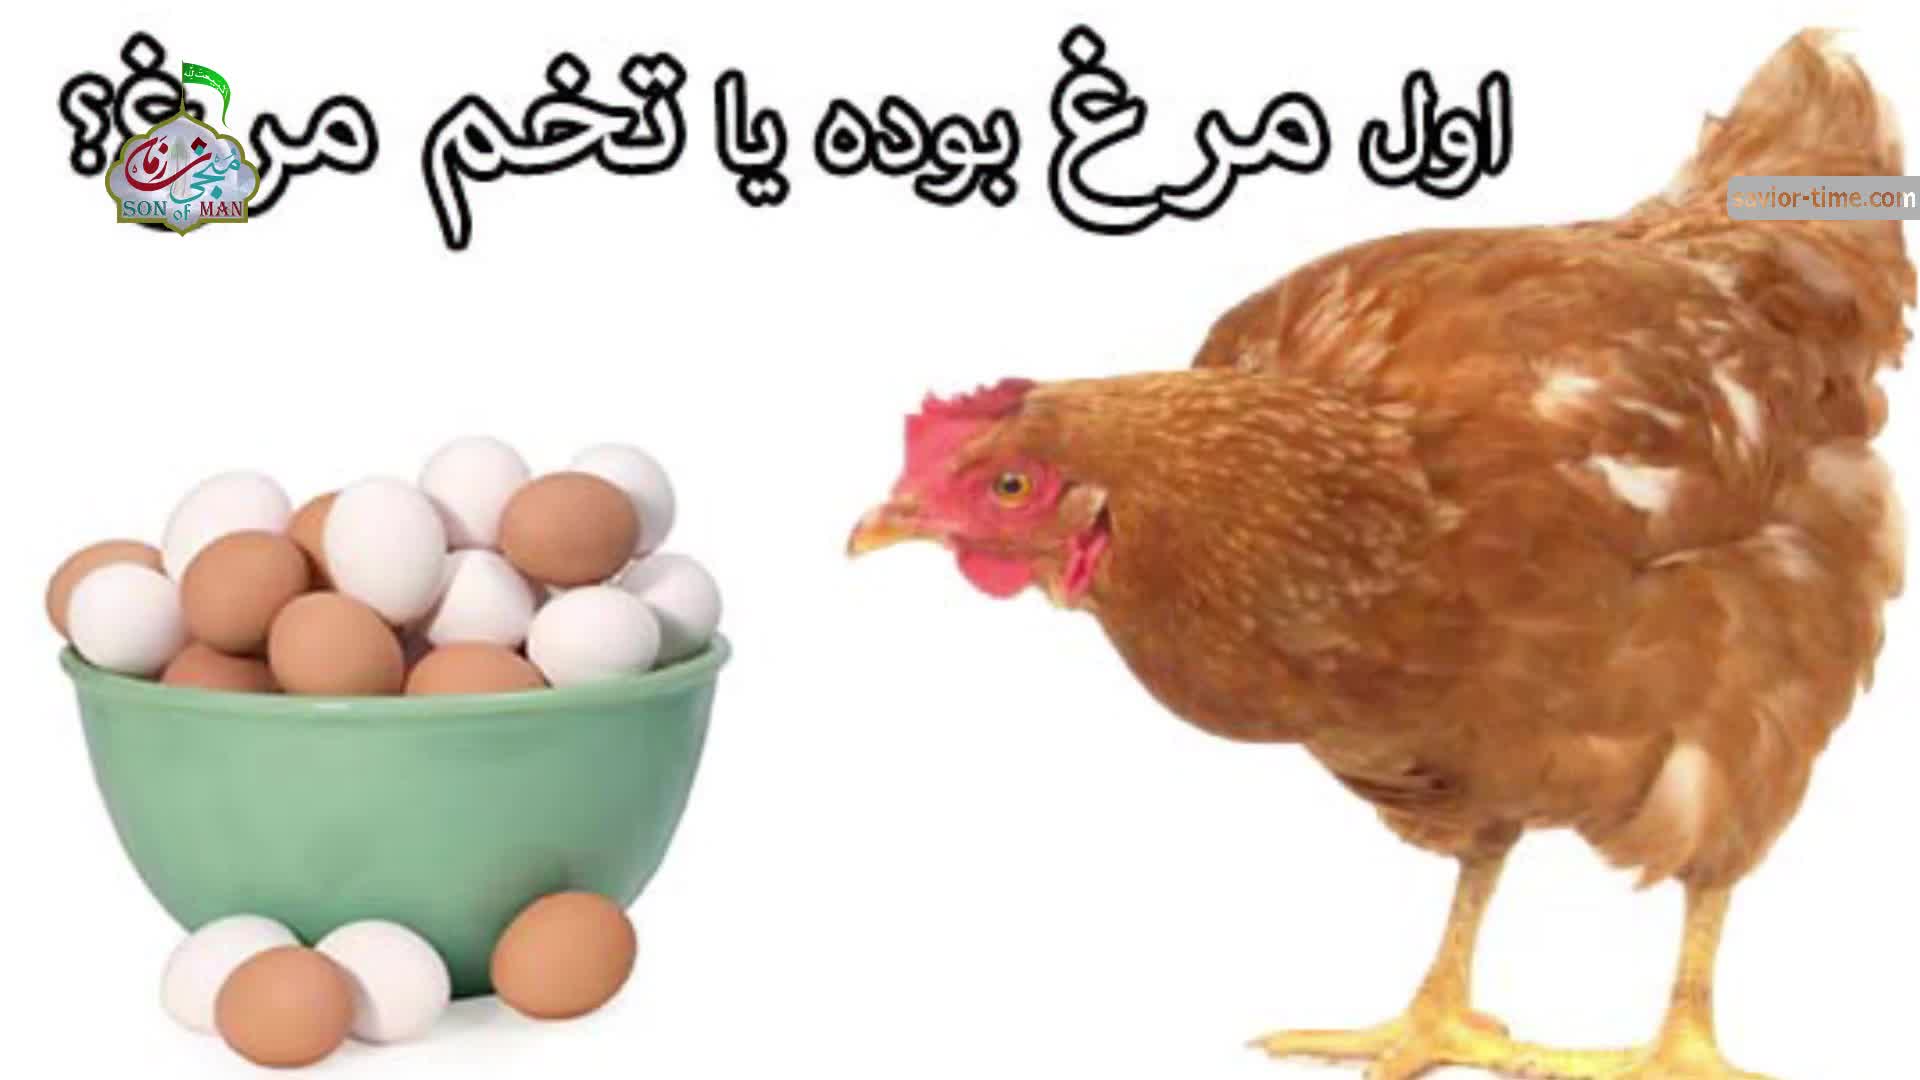 مرغ یا تخم مرغ؟